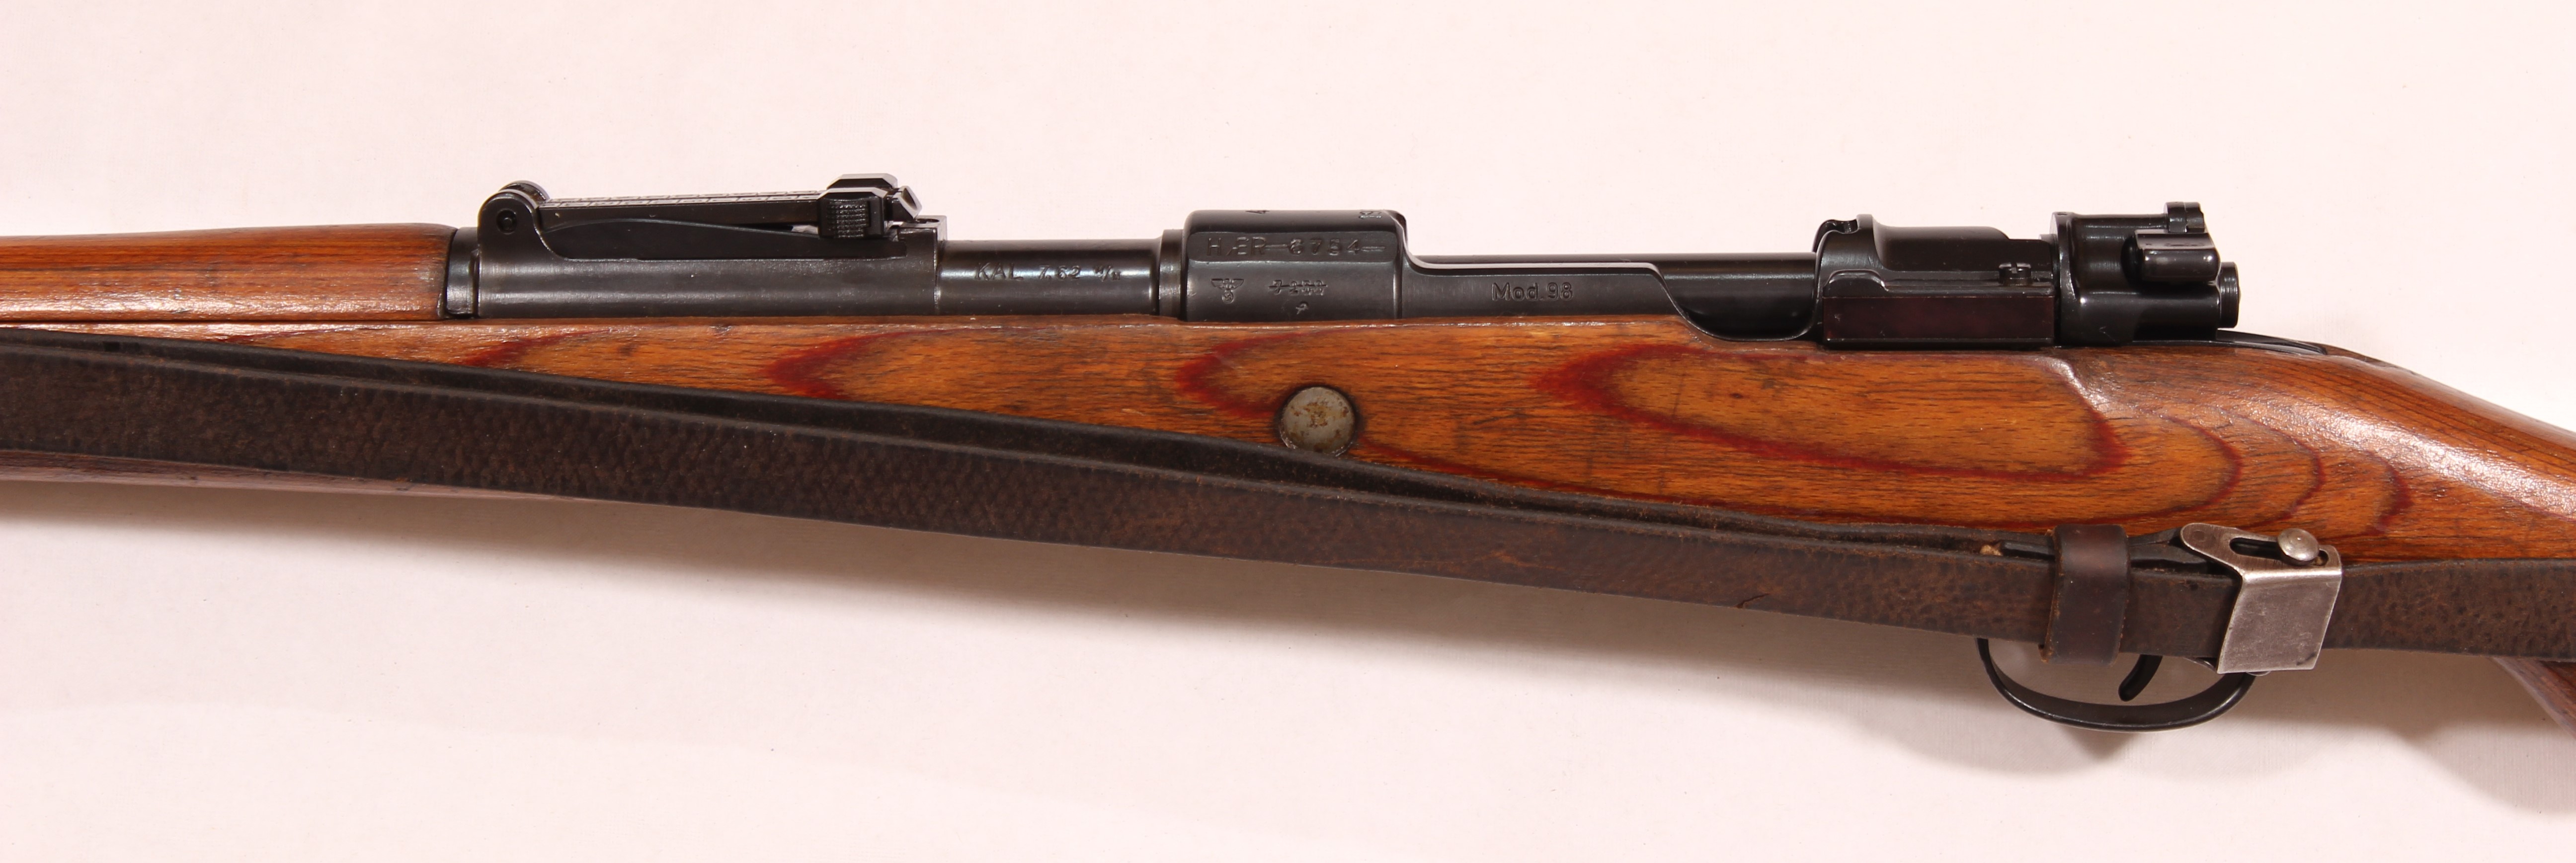 ./guns/rifle/bilder/Rifle-Kongsberg-Mauser-M98F1-HAER6754-4.JPG